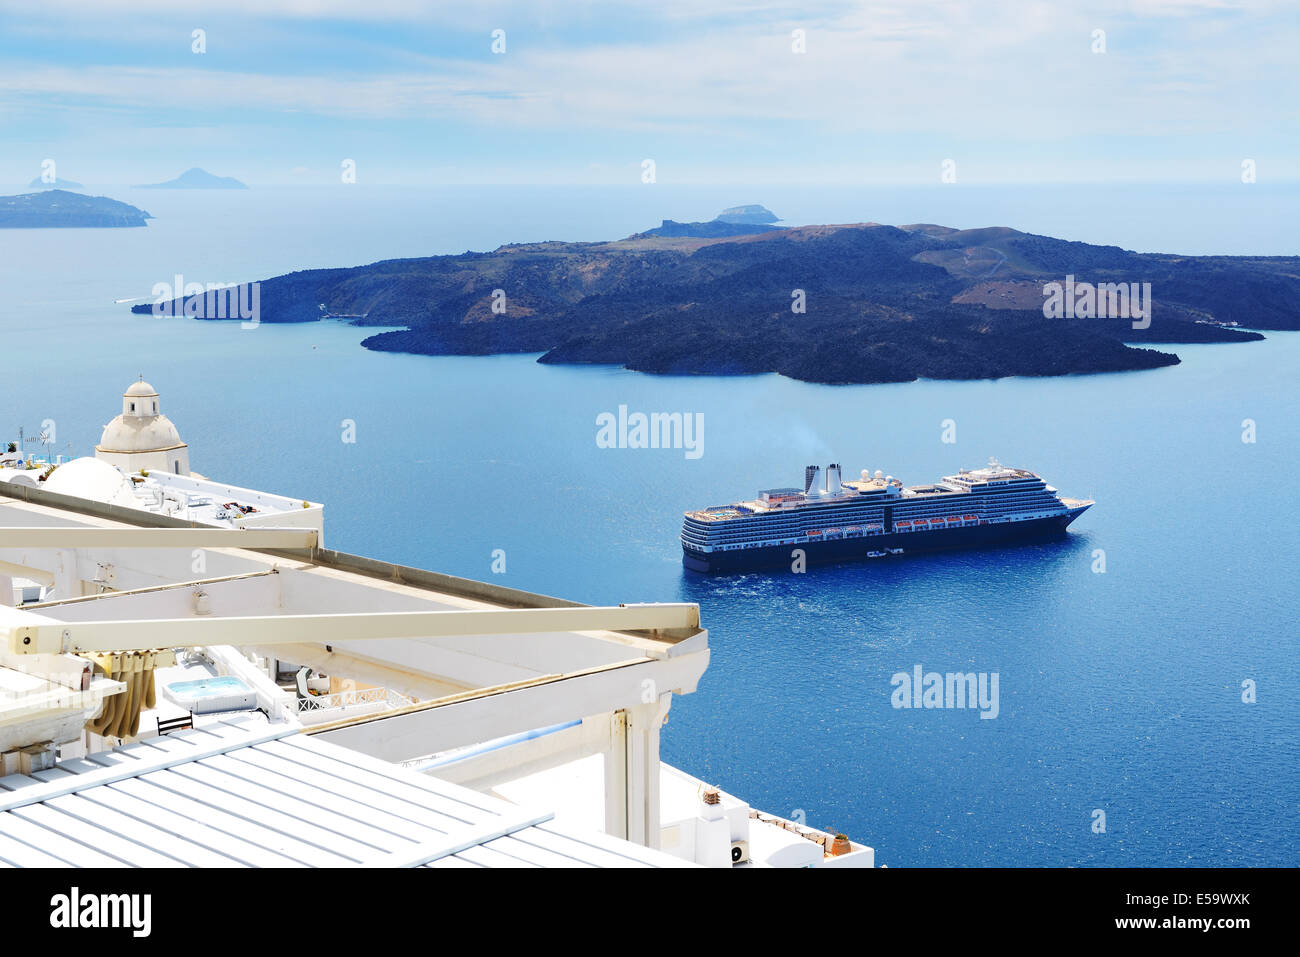 The view on Aegean sea and cruise ship, Santorini island, Greece Stock Photo